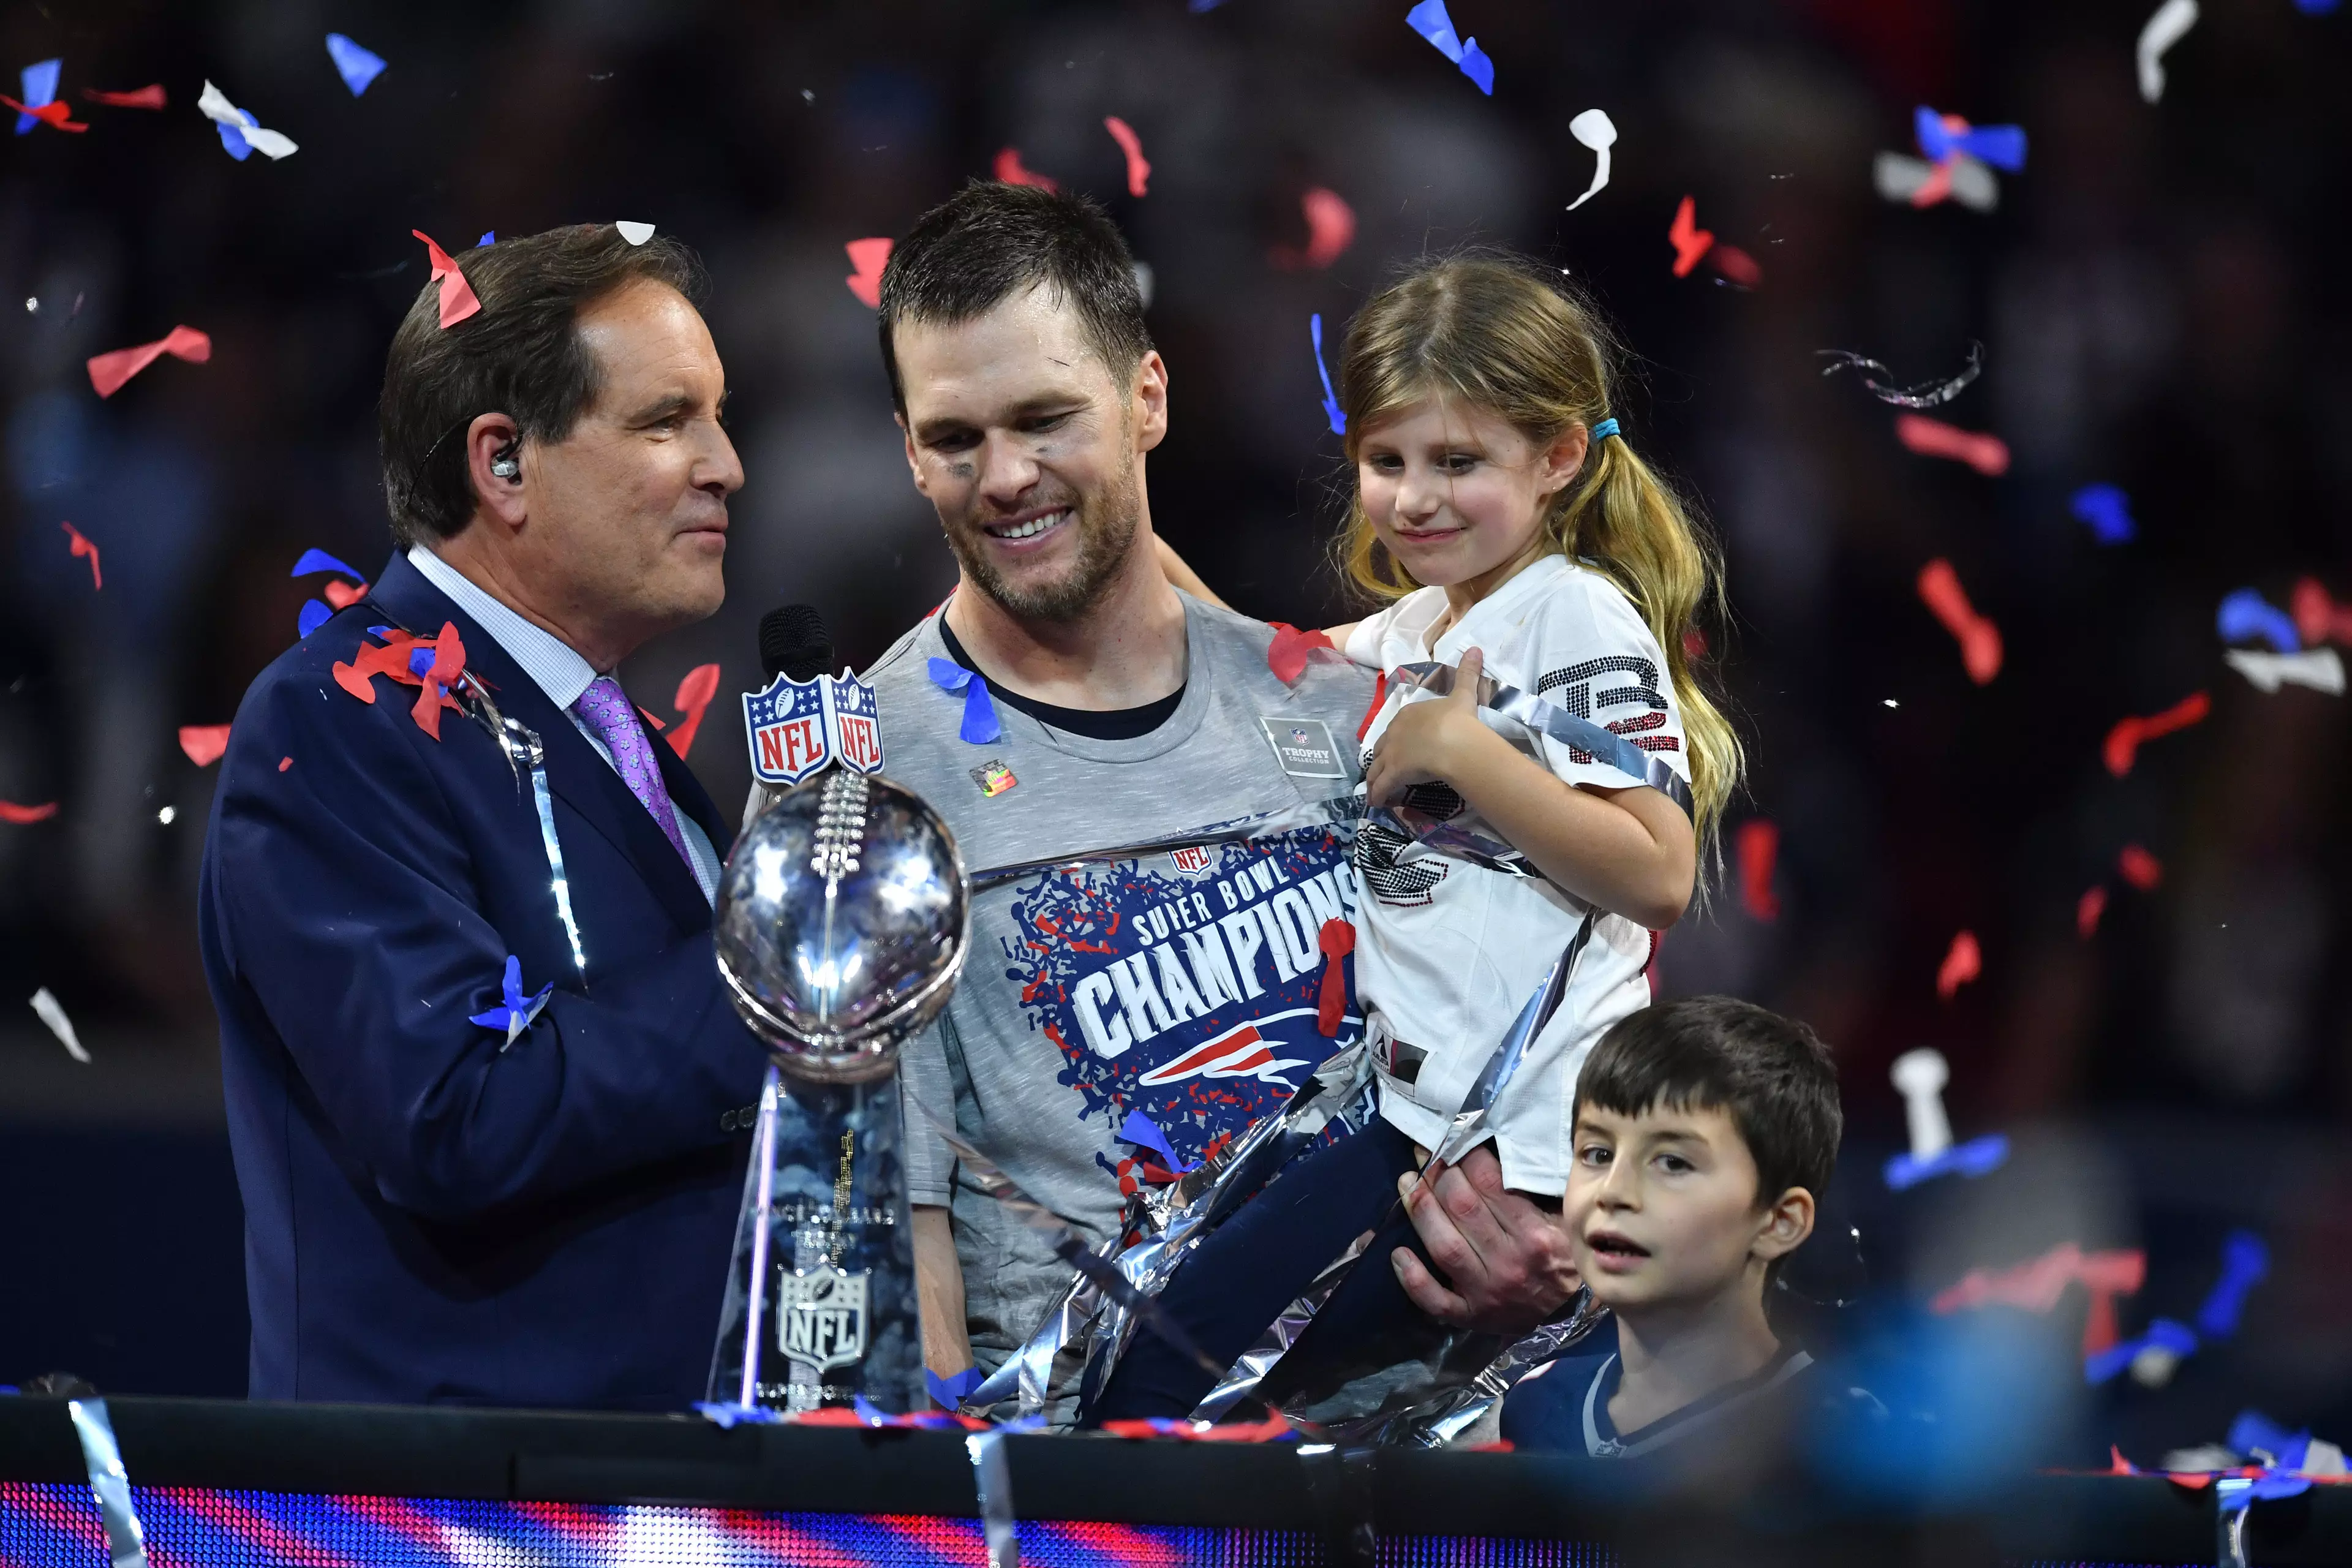 Tom Brady won his sixth Super Bowl in Atlanta in February